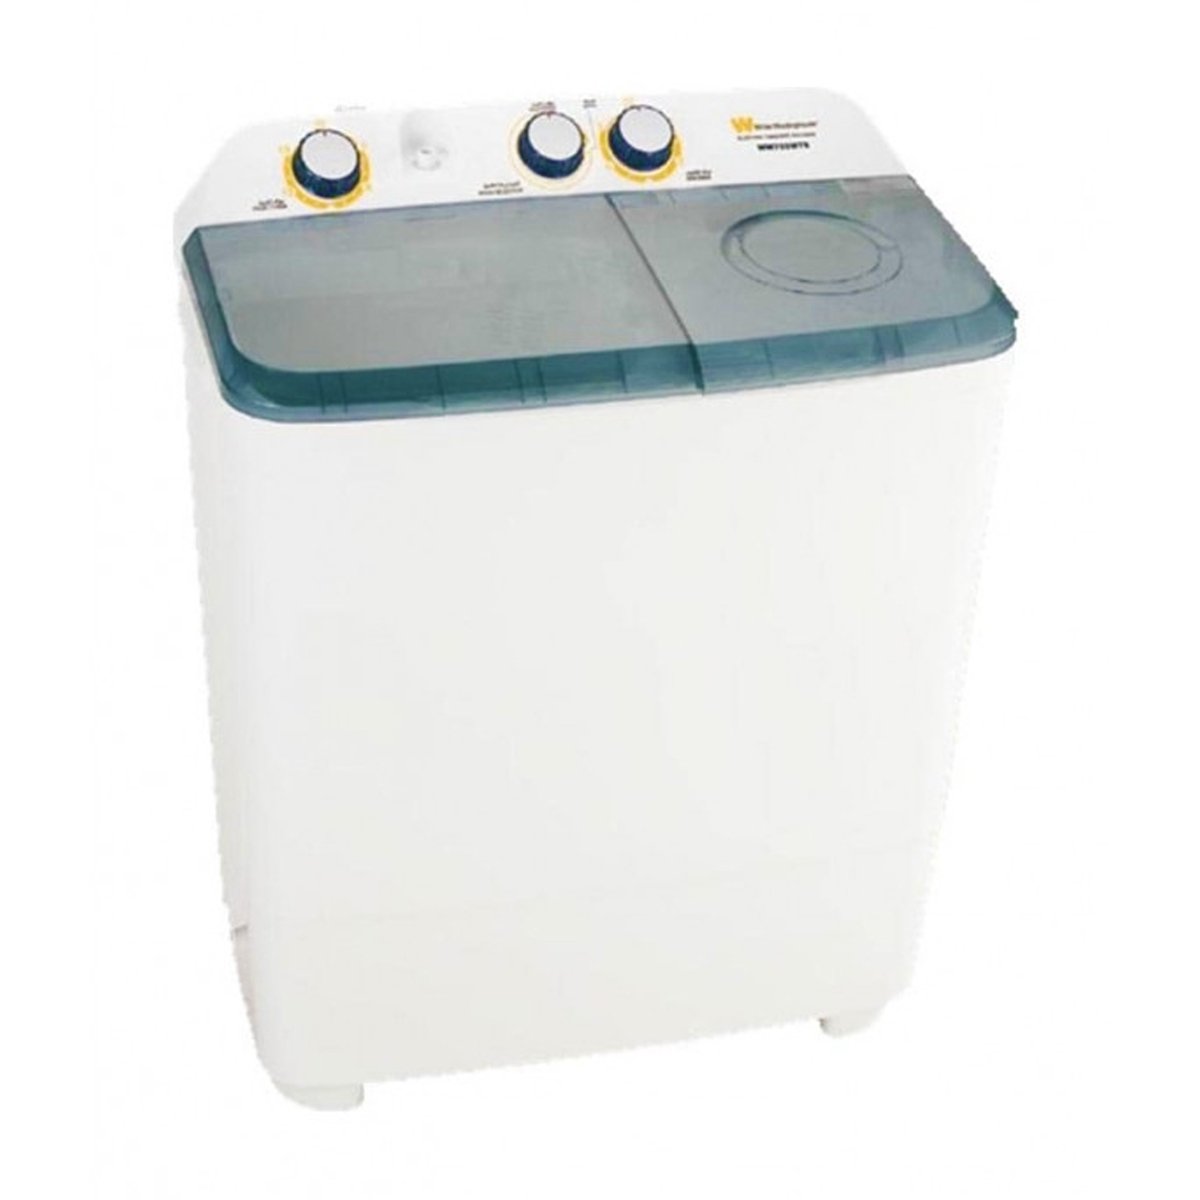 White Westing House Semi Automatic Washing Machine WW700MT9 7Kg